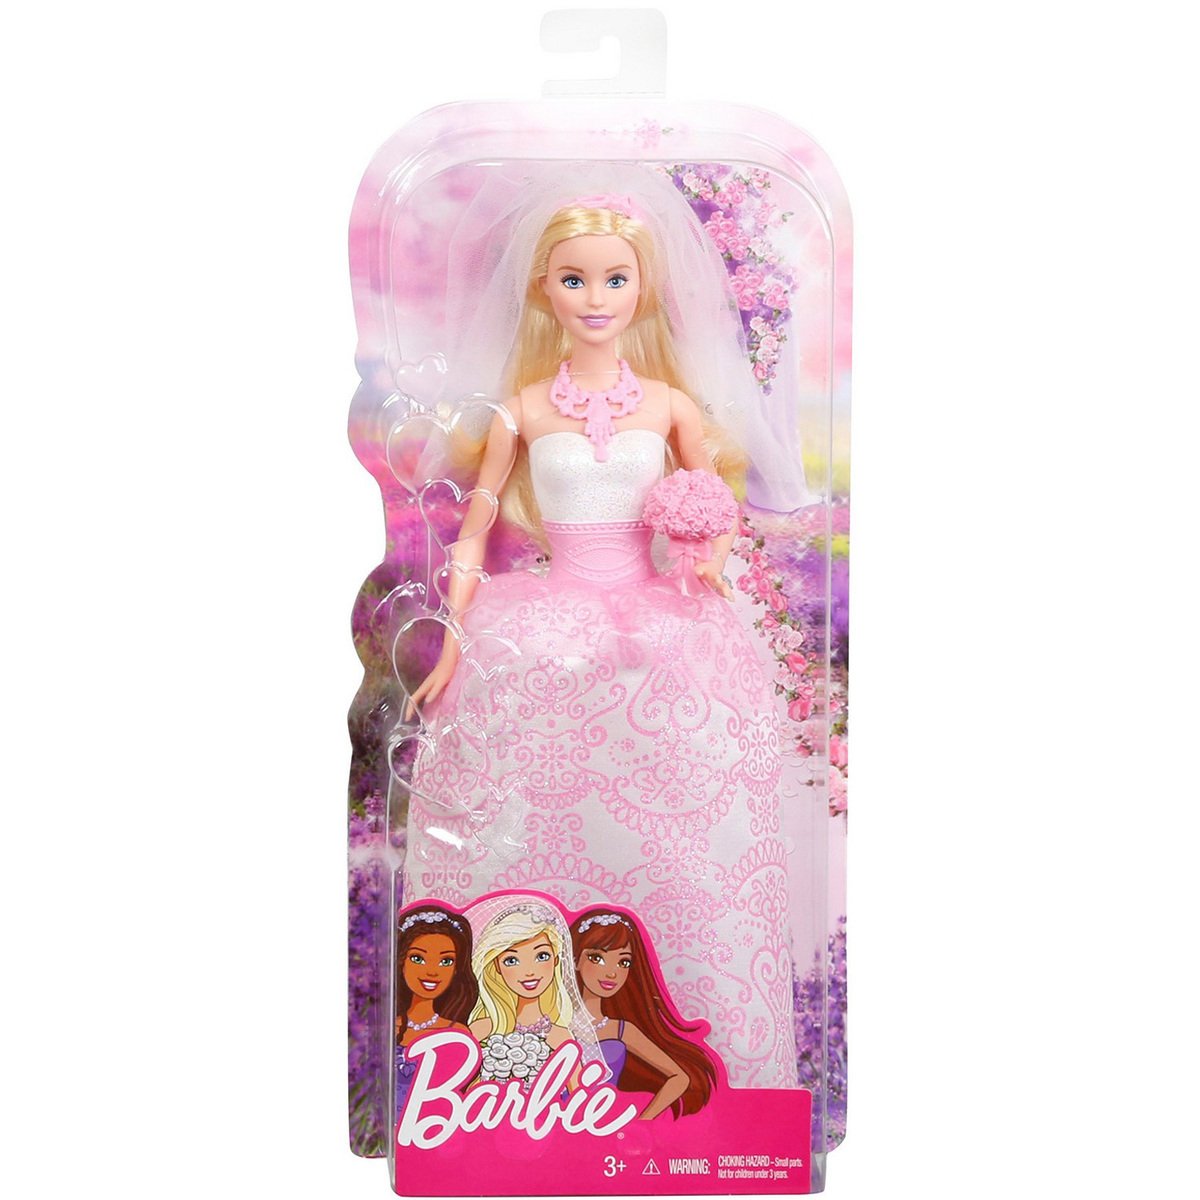 Barbie Fairytale Royal Bride CFF37